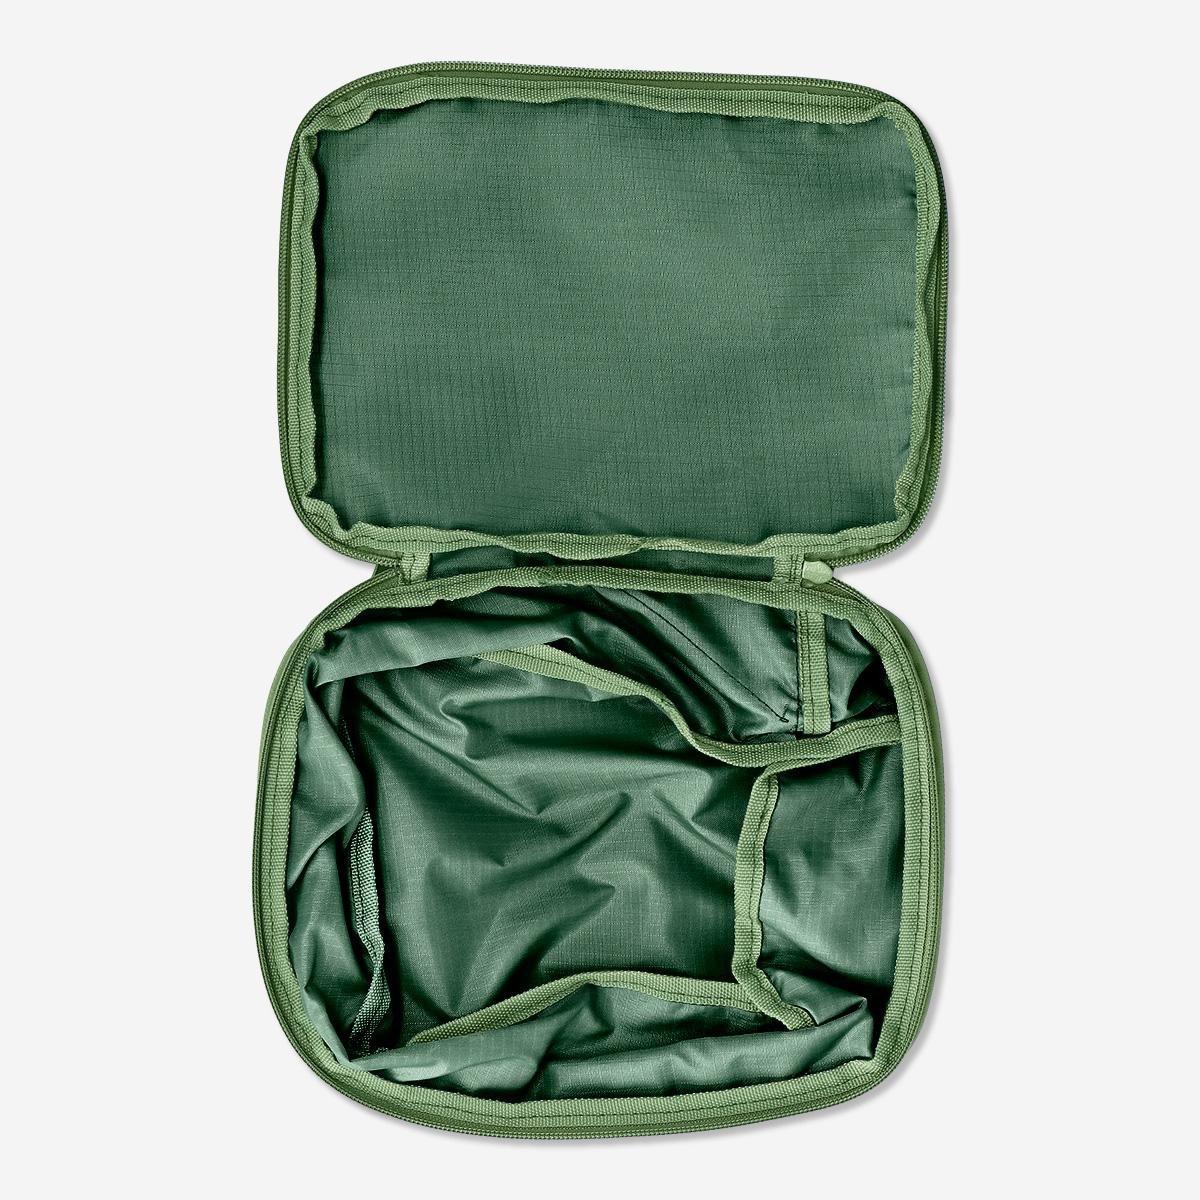 Green compression organiser bag. small